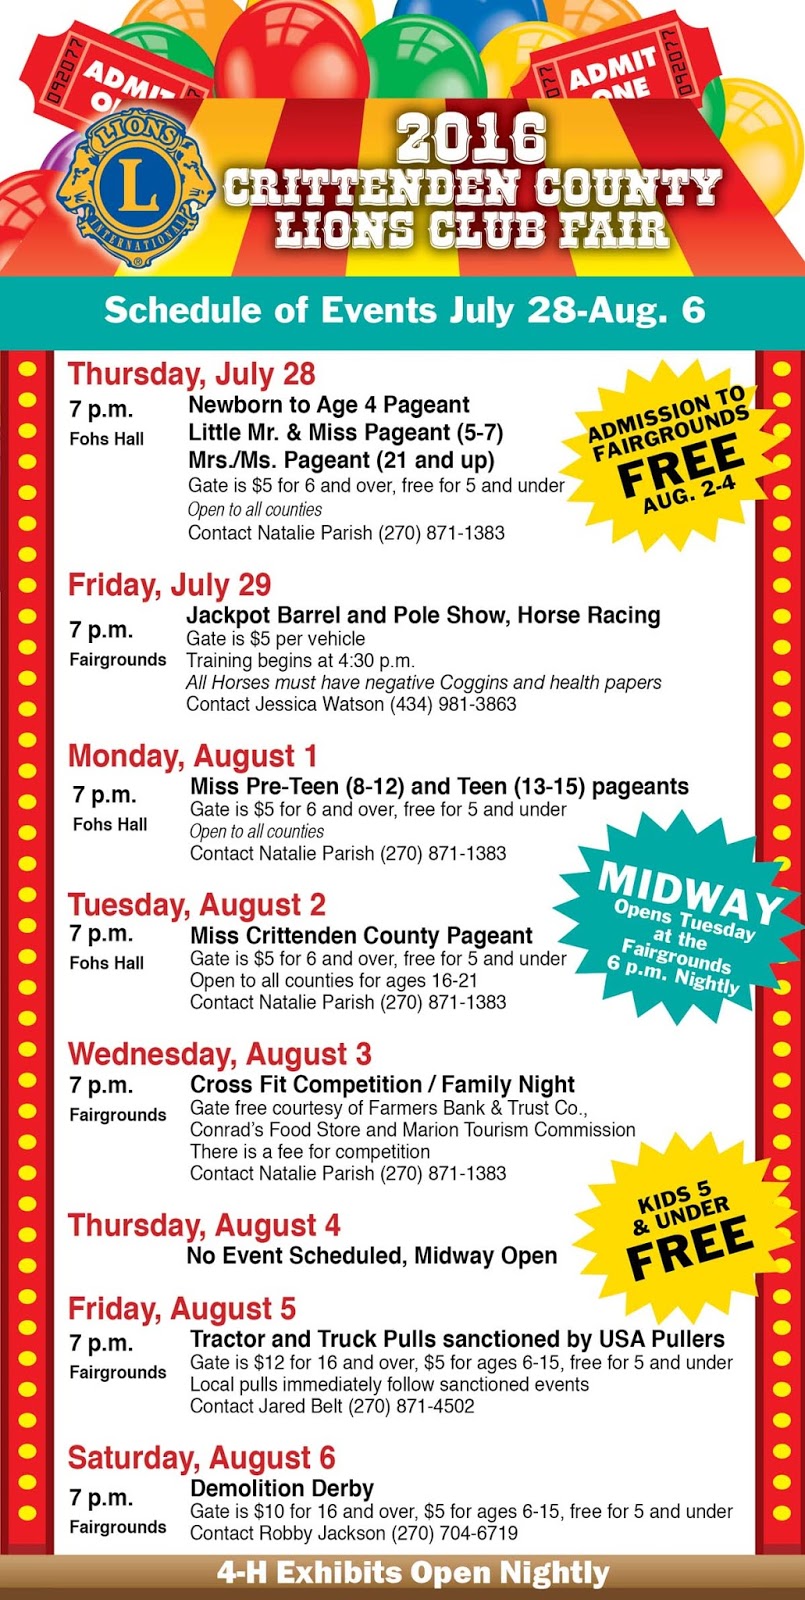 The Press Online County Fair Schedule